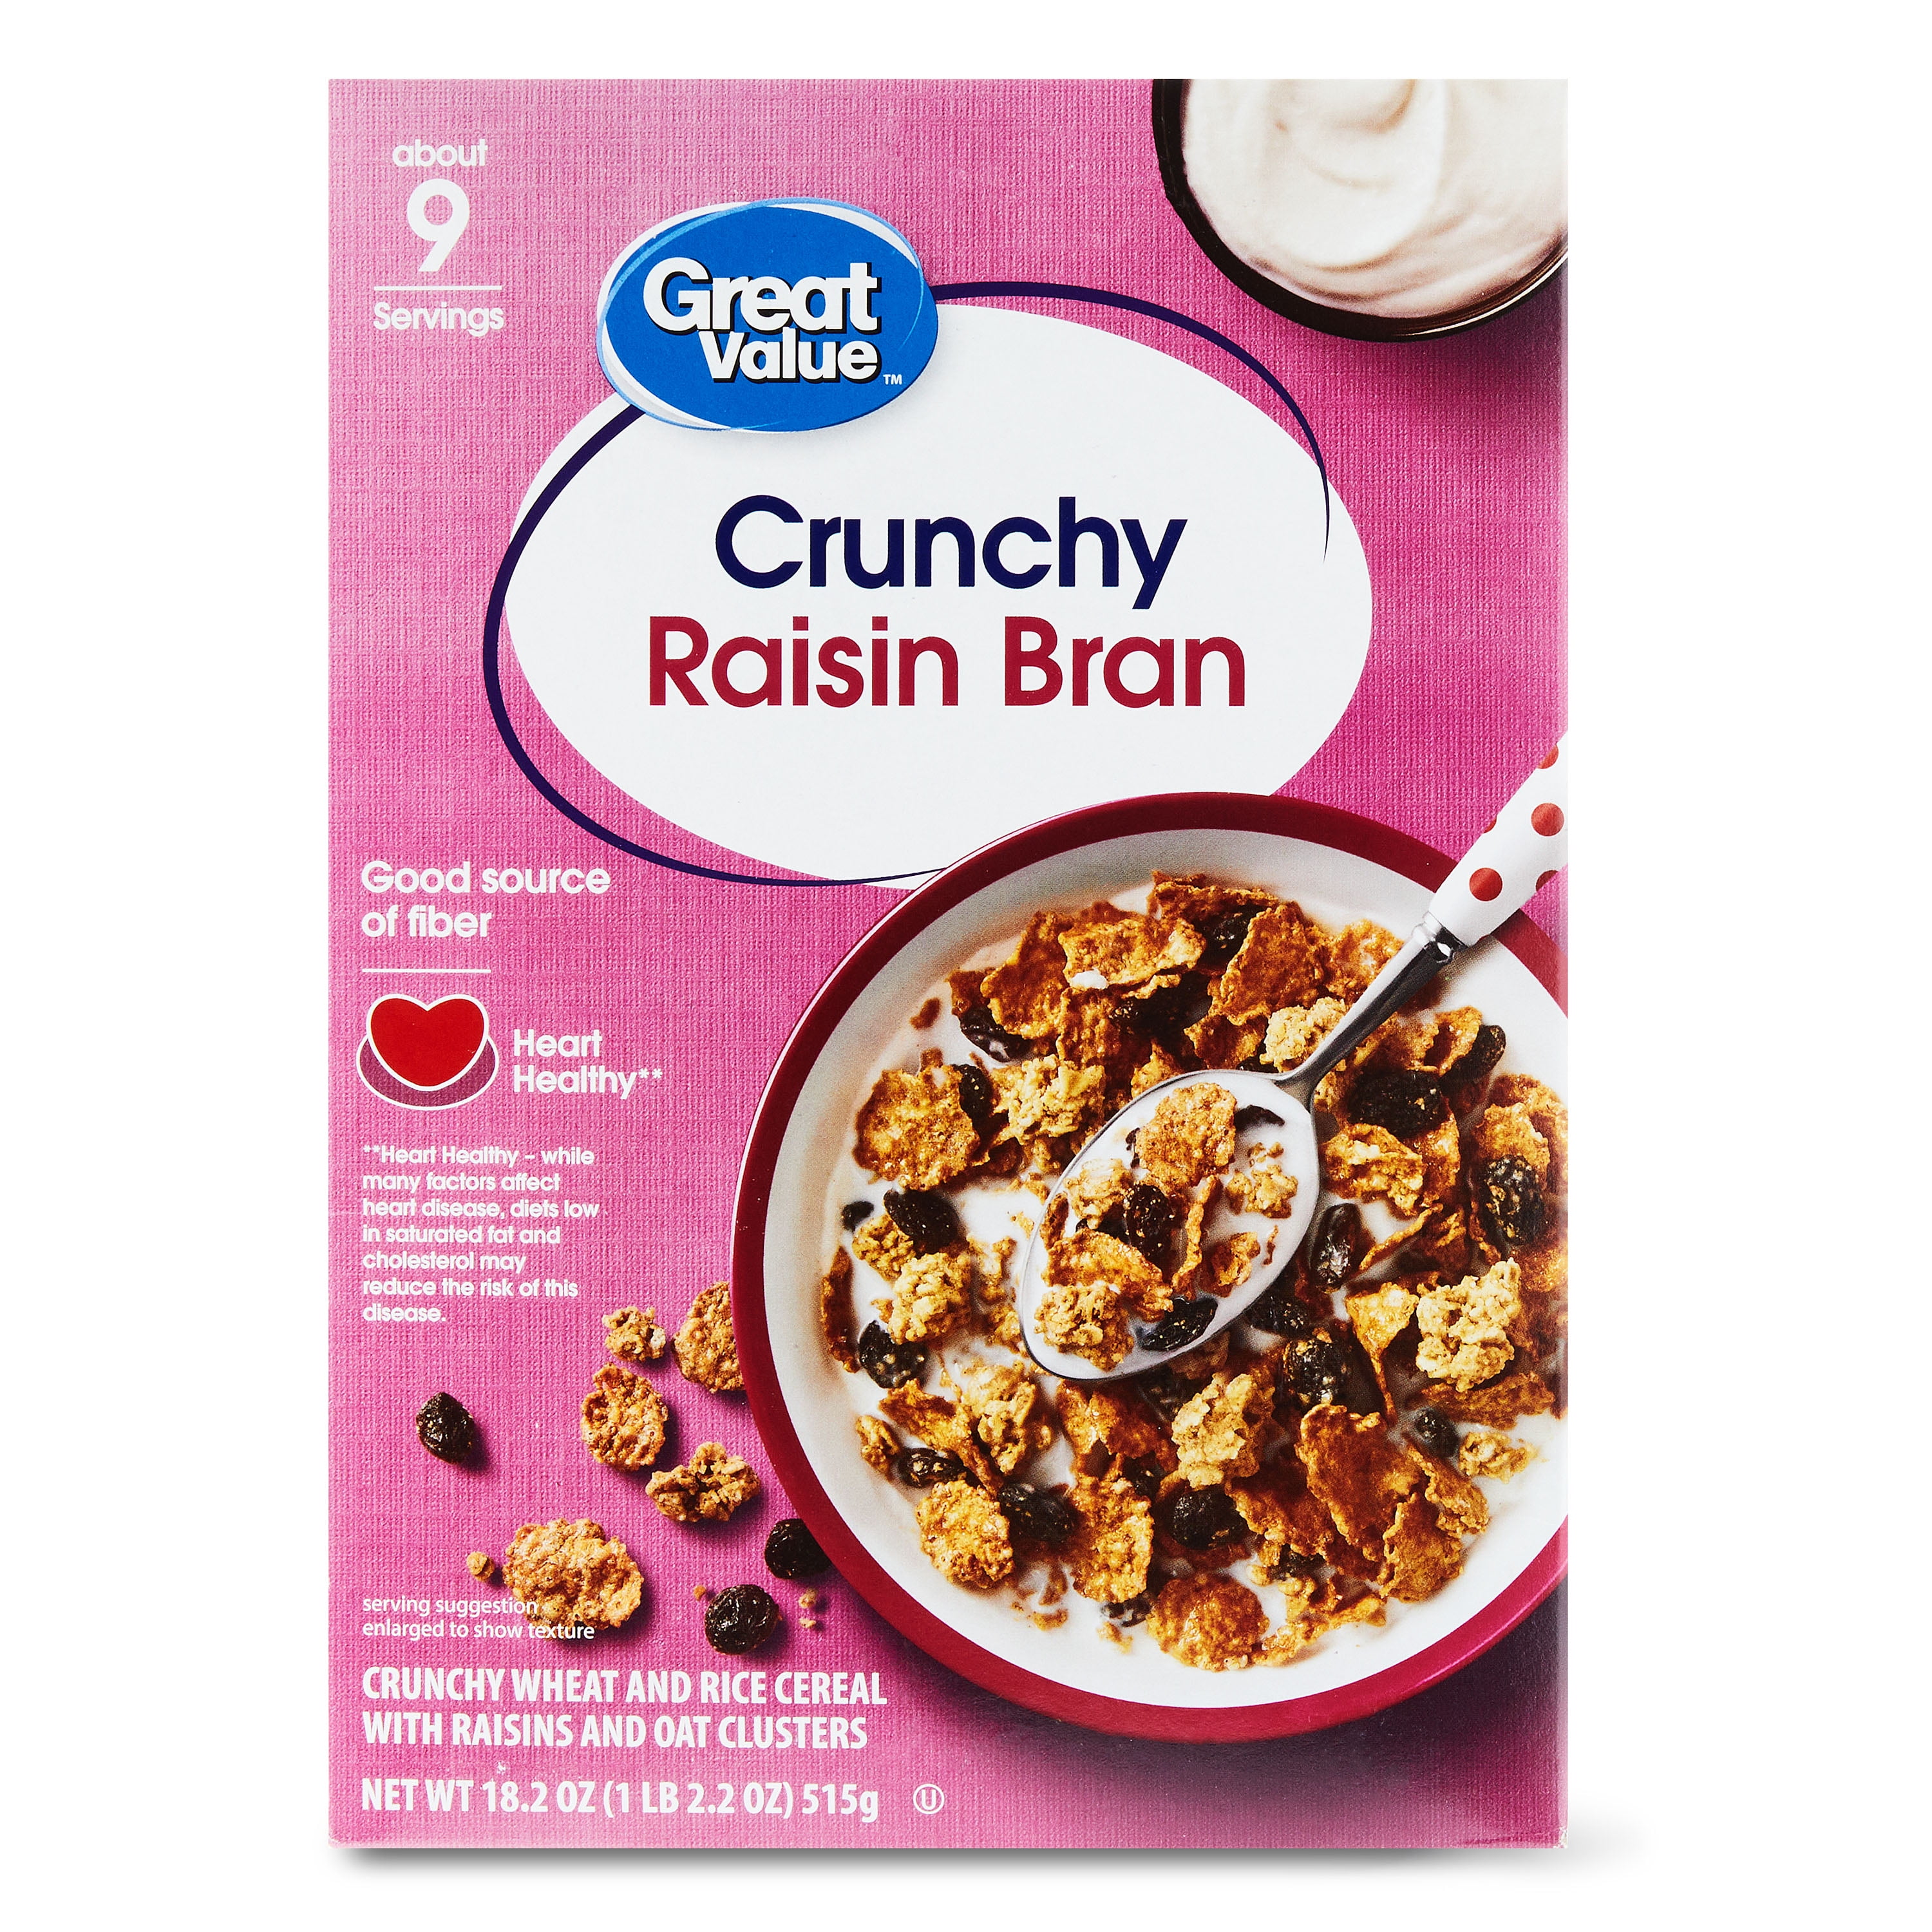 Great Value Crunchy Raisin Bran Breakfast Cereal 18 2 Oz Walmart Com